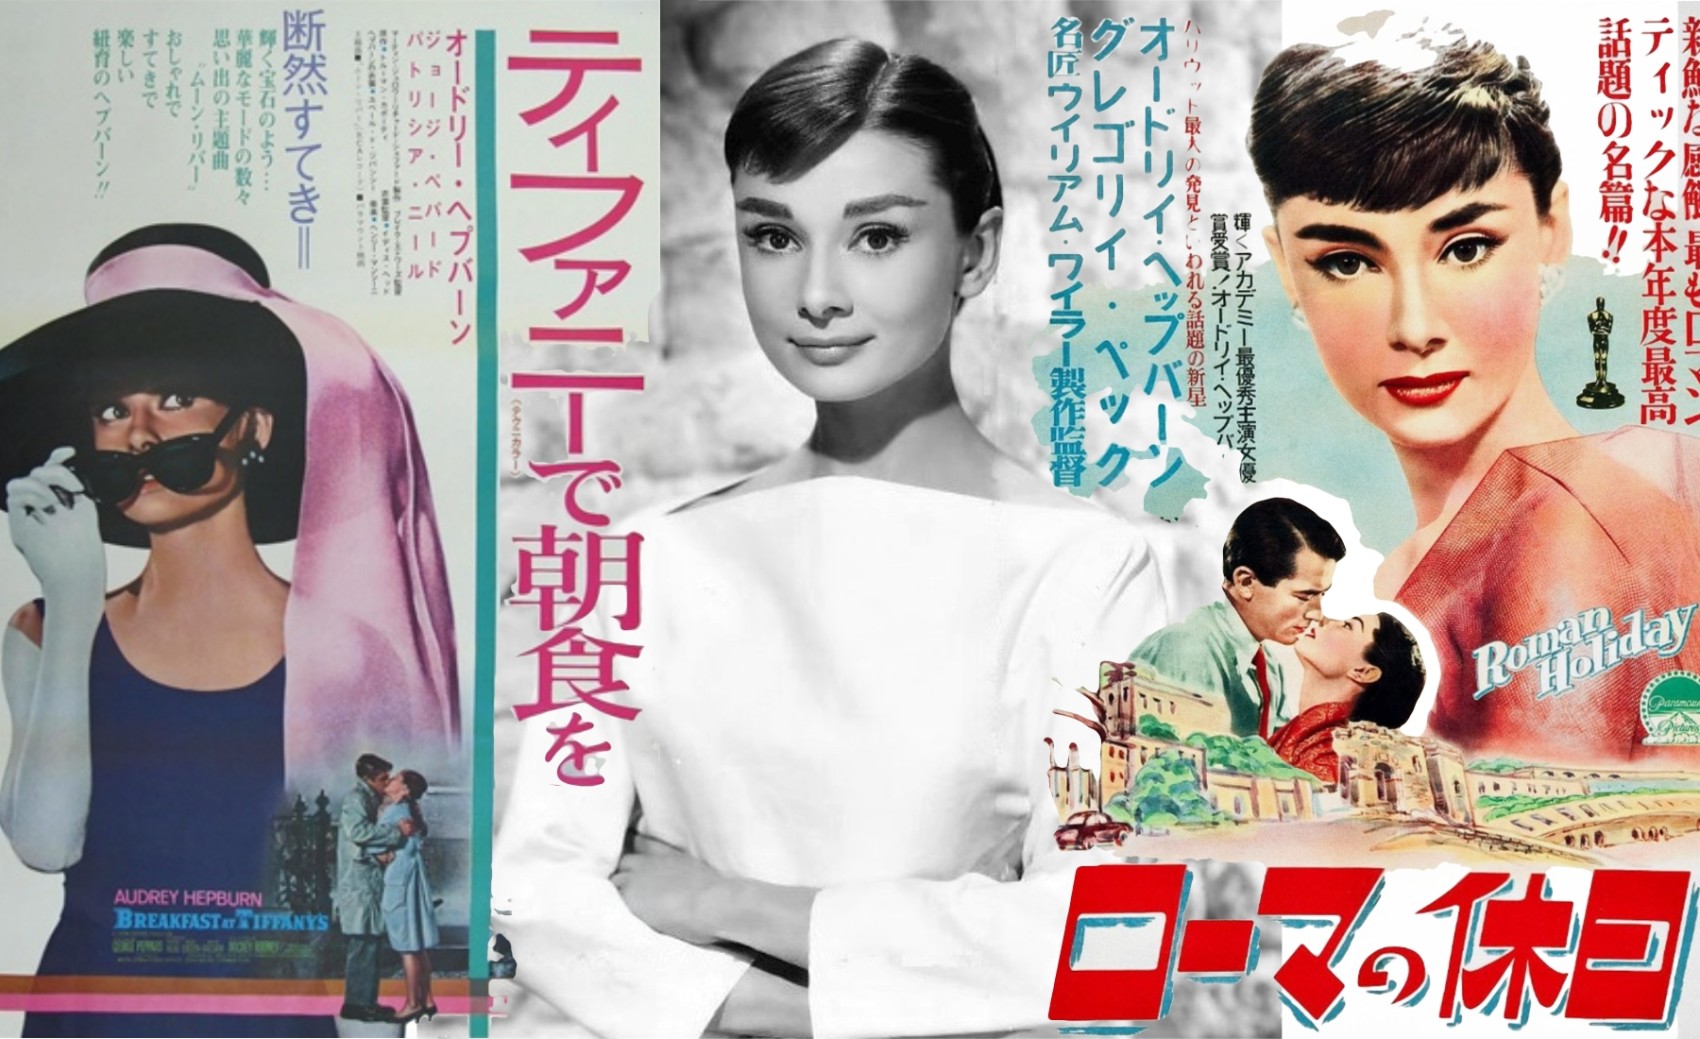 Audrey Hepburn casts a spell over post-war Japan - Japan Today